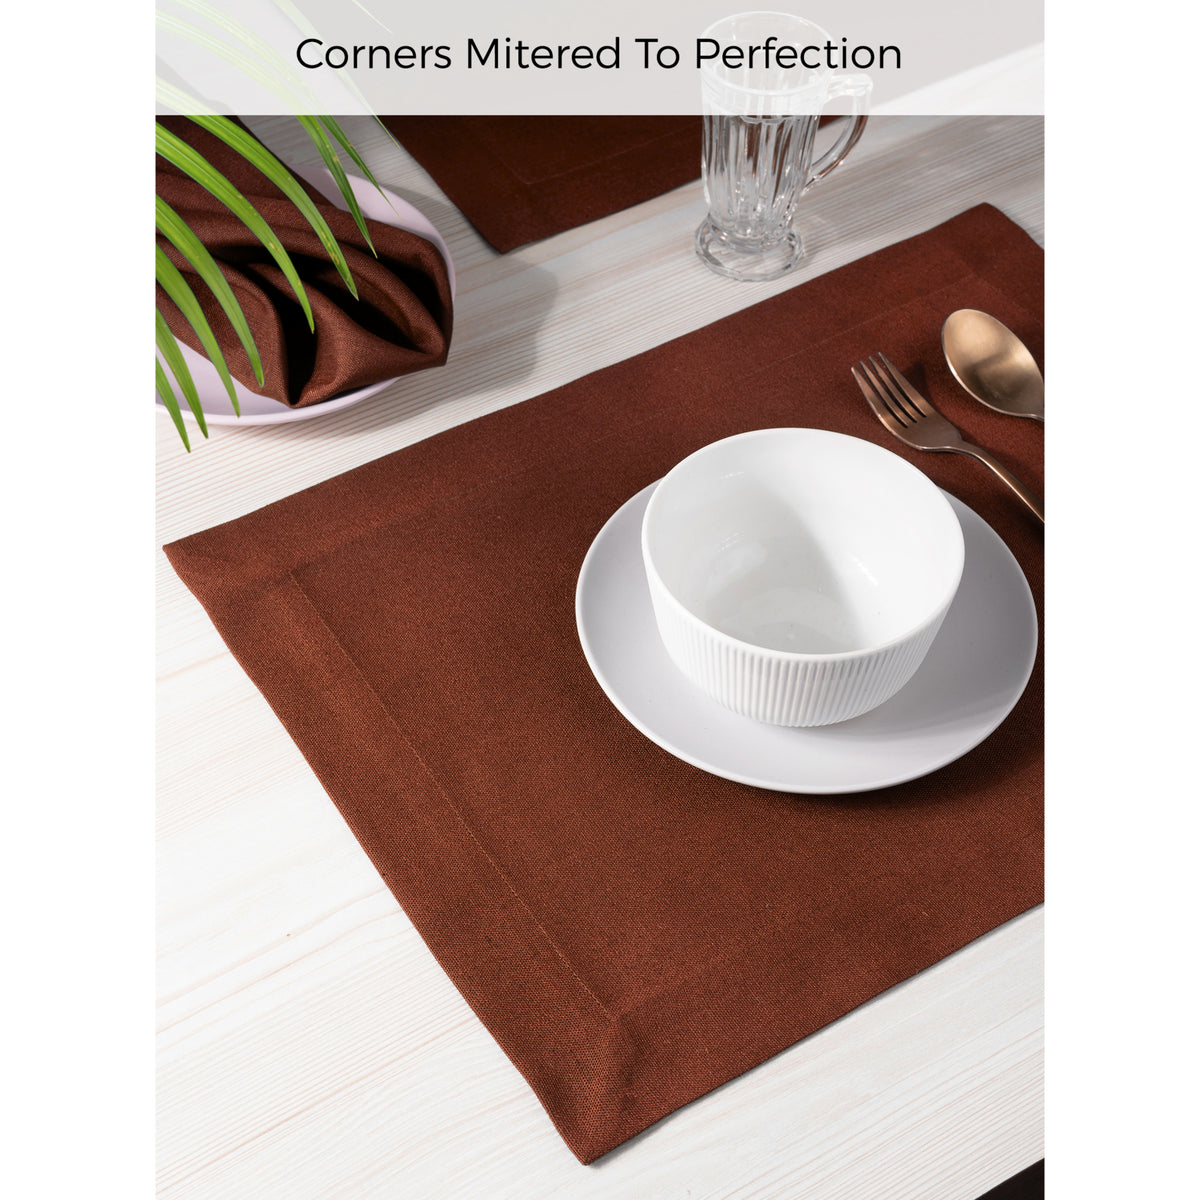 Brown Linen Textured Placemats 14 x 19 Inch Set of 4 - Mitered Corner